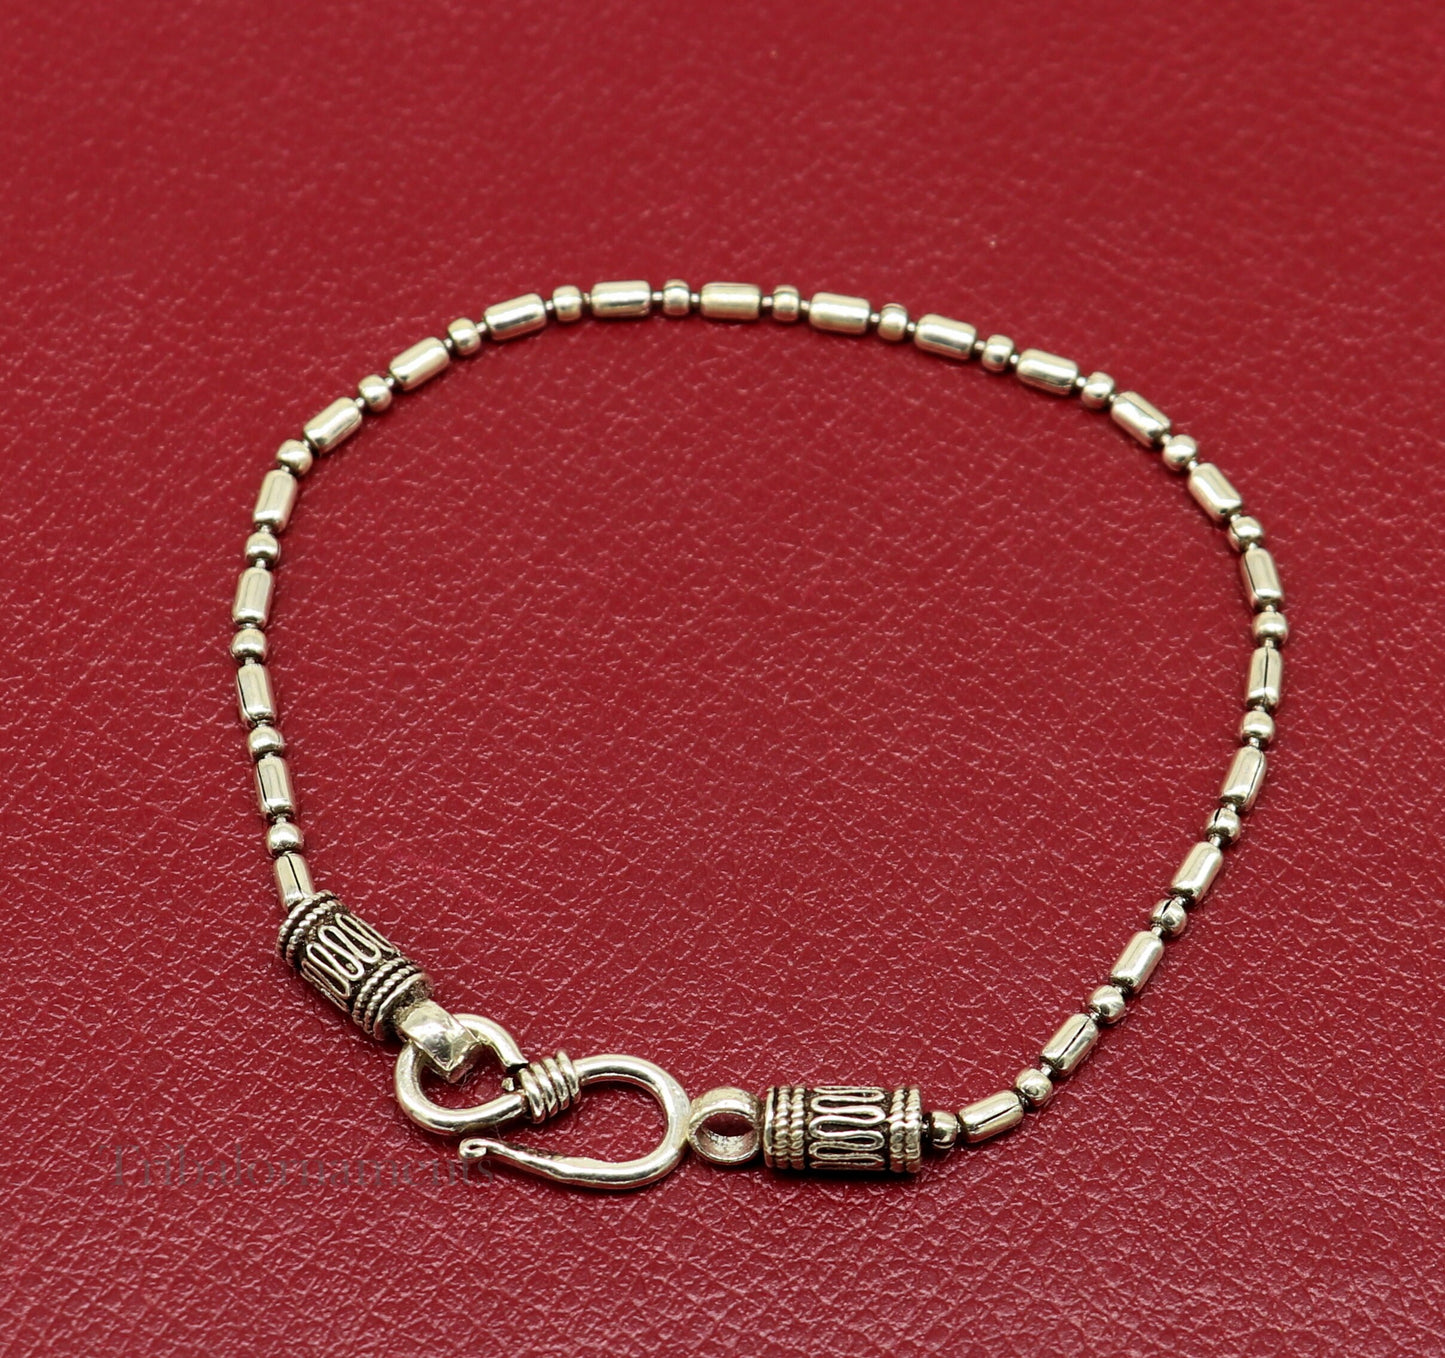 7.5" or 8" long plain beaded bracelet 925 sterling silver elegant customized girl's bracelet , best gifting jewelry from india nsbr396 - TRIBAL ORNAMENTS